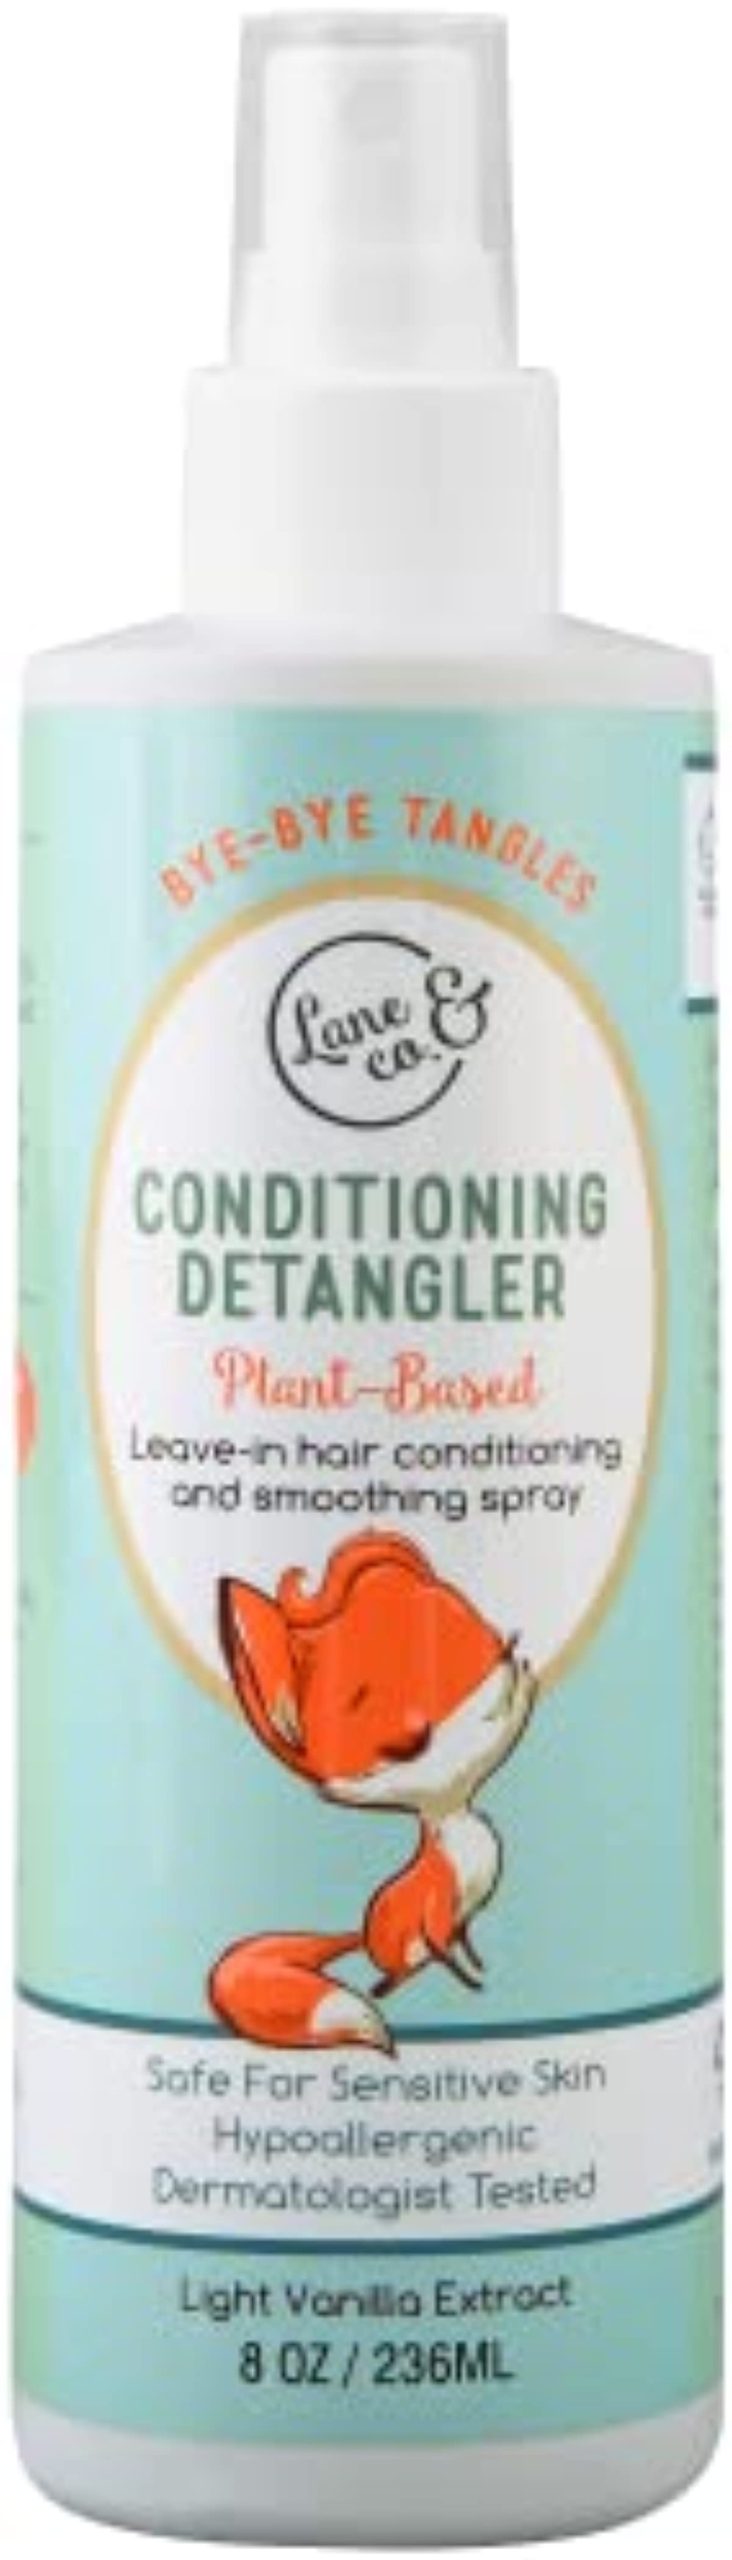 Lane & Co. Conditioning Detangler Spray for Kids & Babies - Leave In Conditioner Spray for Smoothing, Detangling - Vegan, Plant-Based, Child-Safe Formula - Natural Baby Hair Products - 8-oz. Bottle